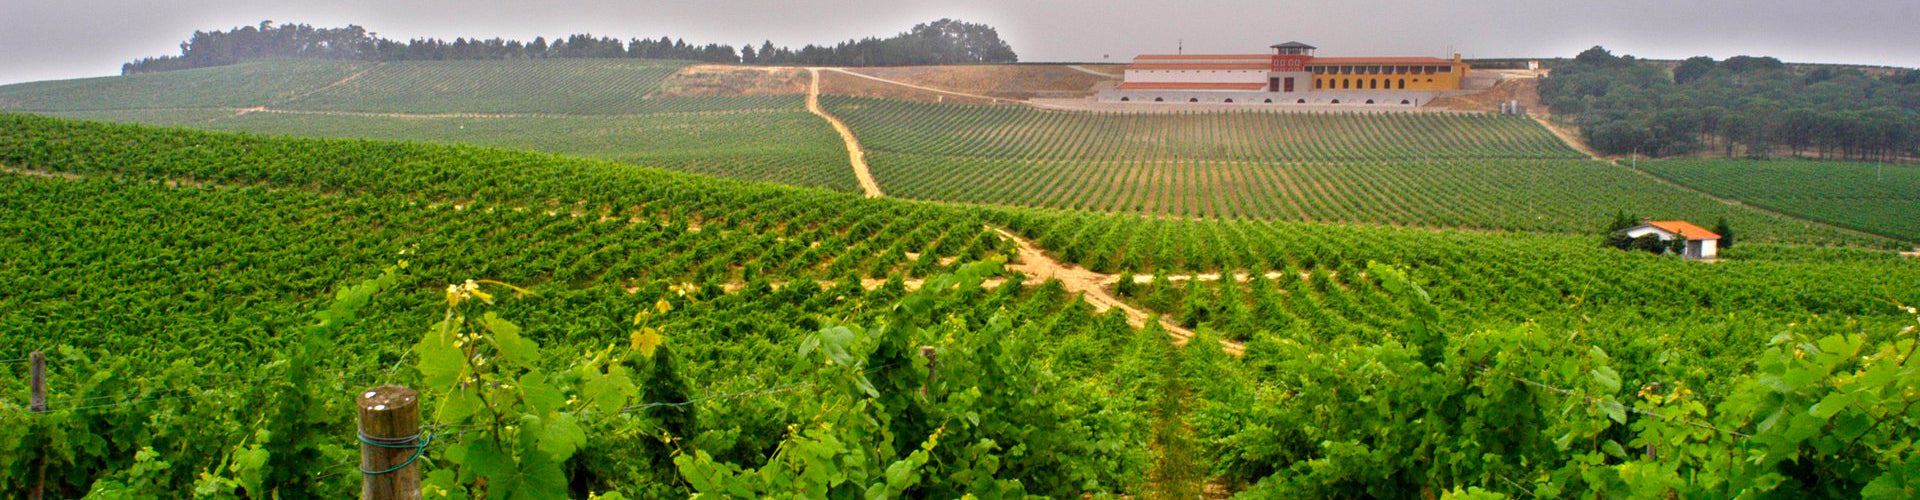 Vineyards of Campolargo in the Bairrada Wine Region of Portugal